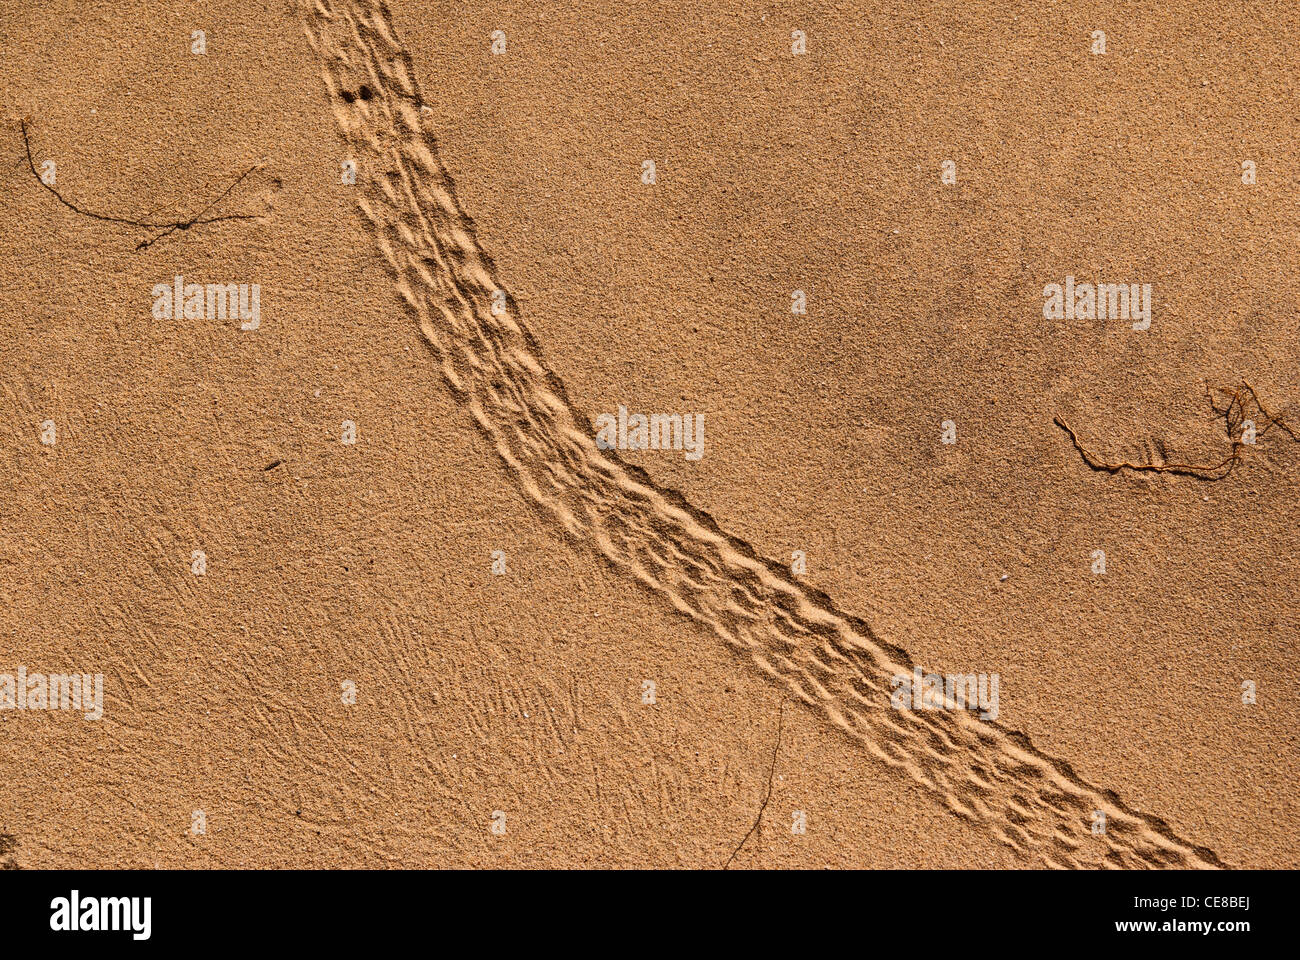 HERMIT CRAB TRACKS IN SAND, BARN HILL, WESTERN AUSTRALIA, AUSTRALIA Stock Photo